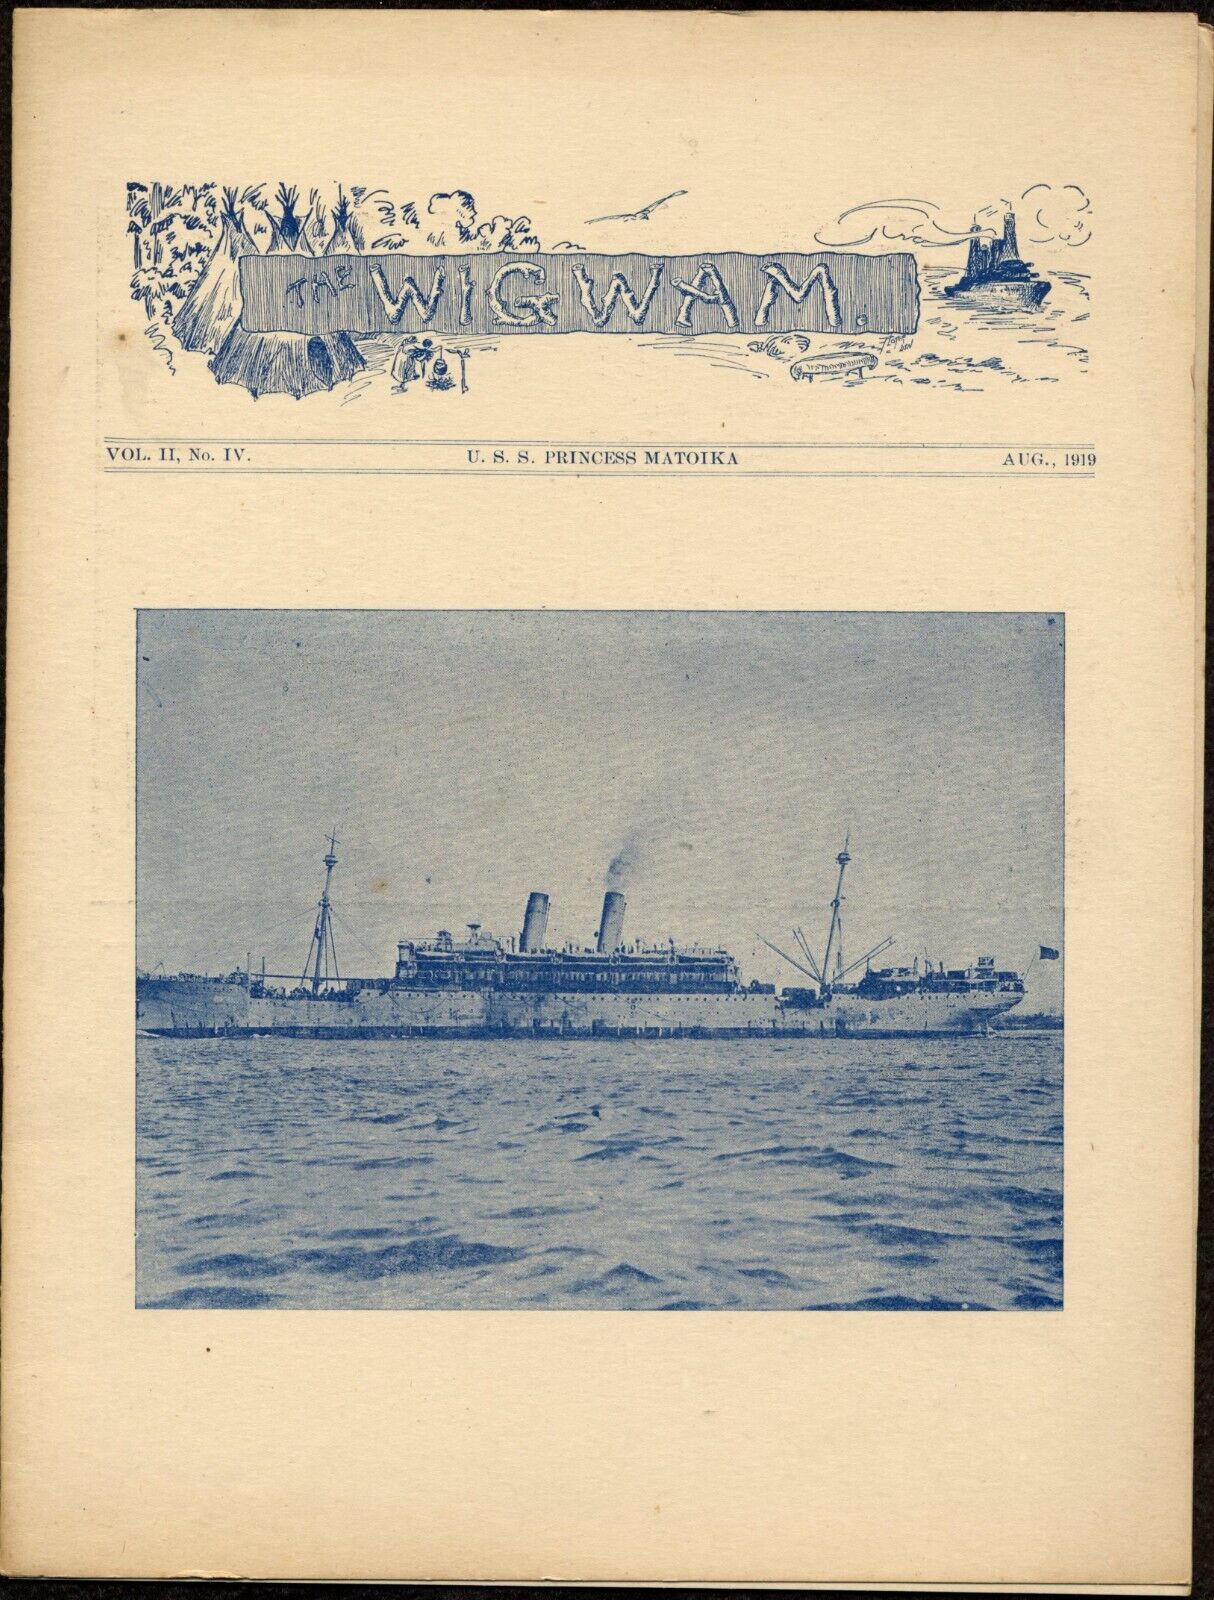 August 1919 Coast Guard Newsletter U.S.S. Princess Matoika-The Wigwam Aug 1919